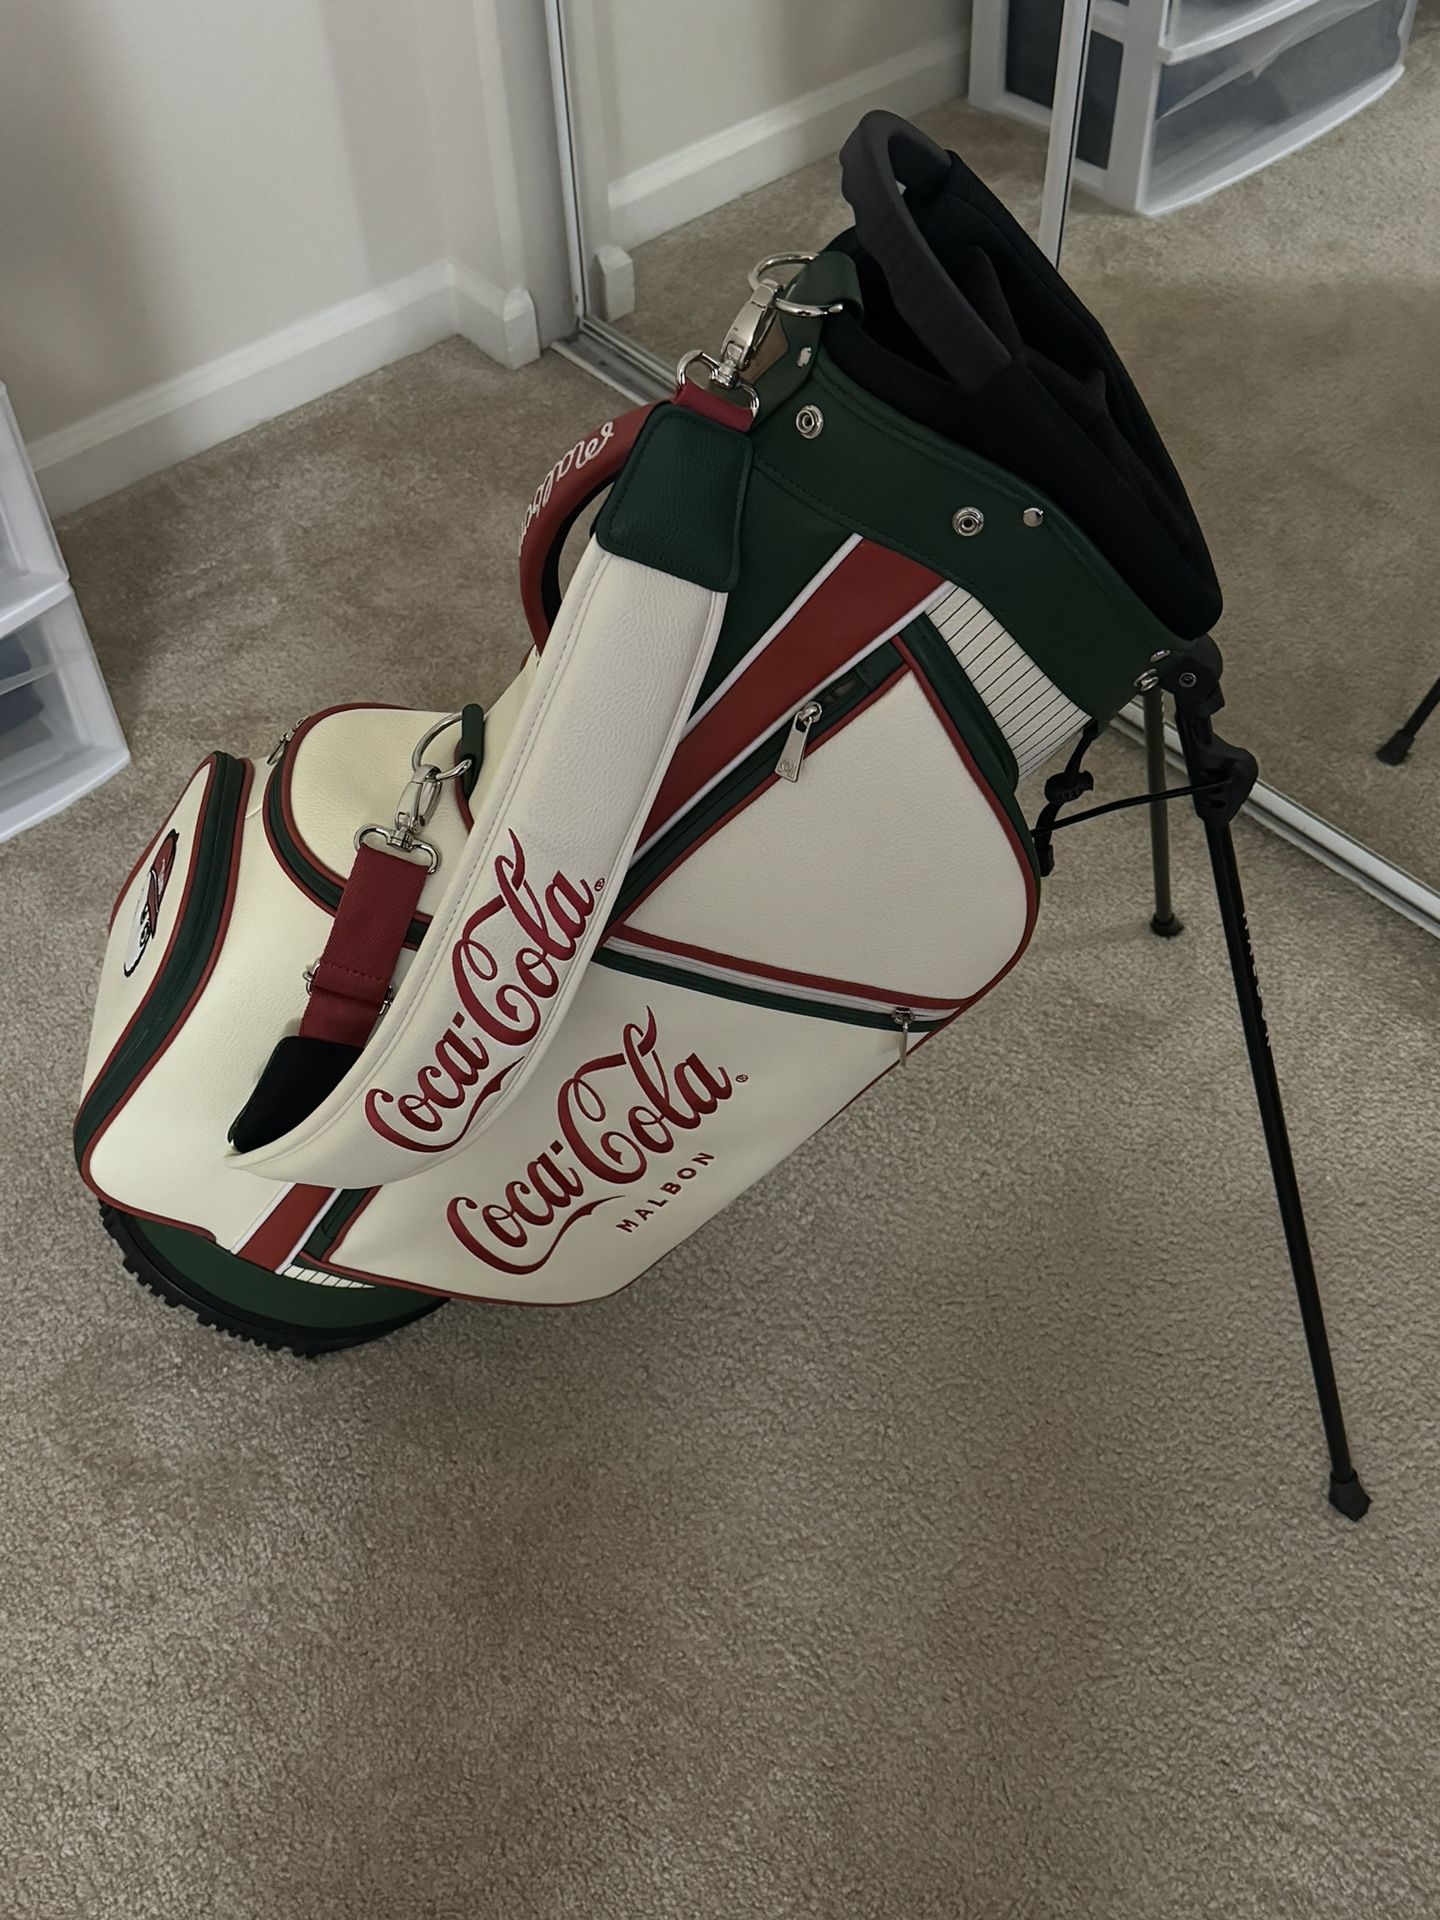 Malbon Golf Bag, Coca cola edition